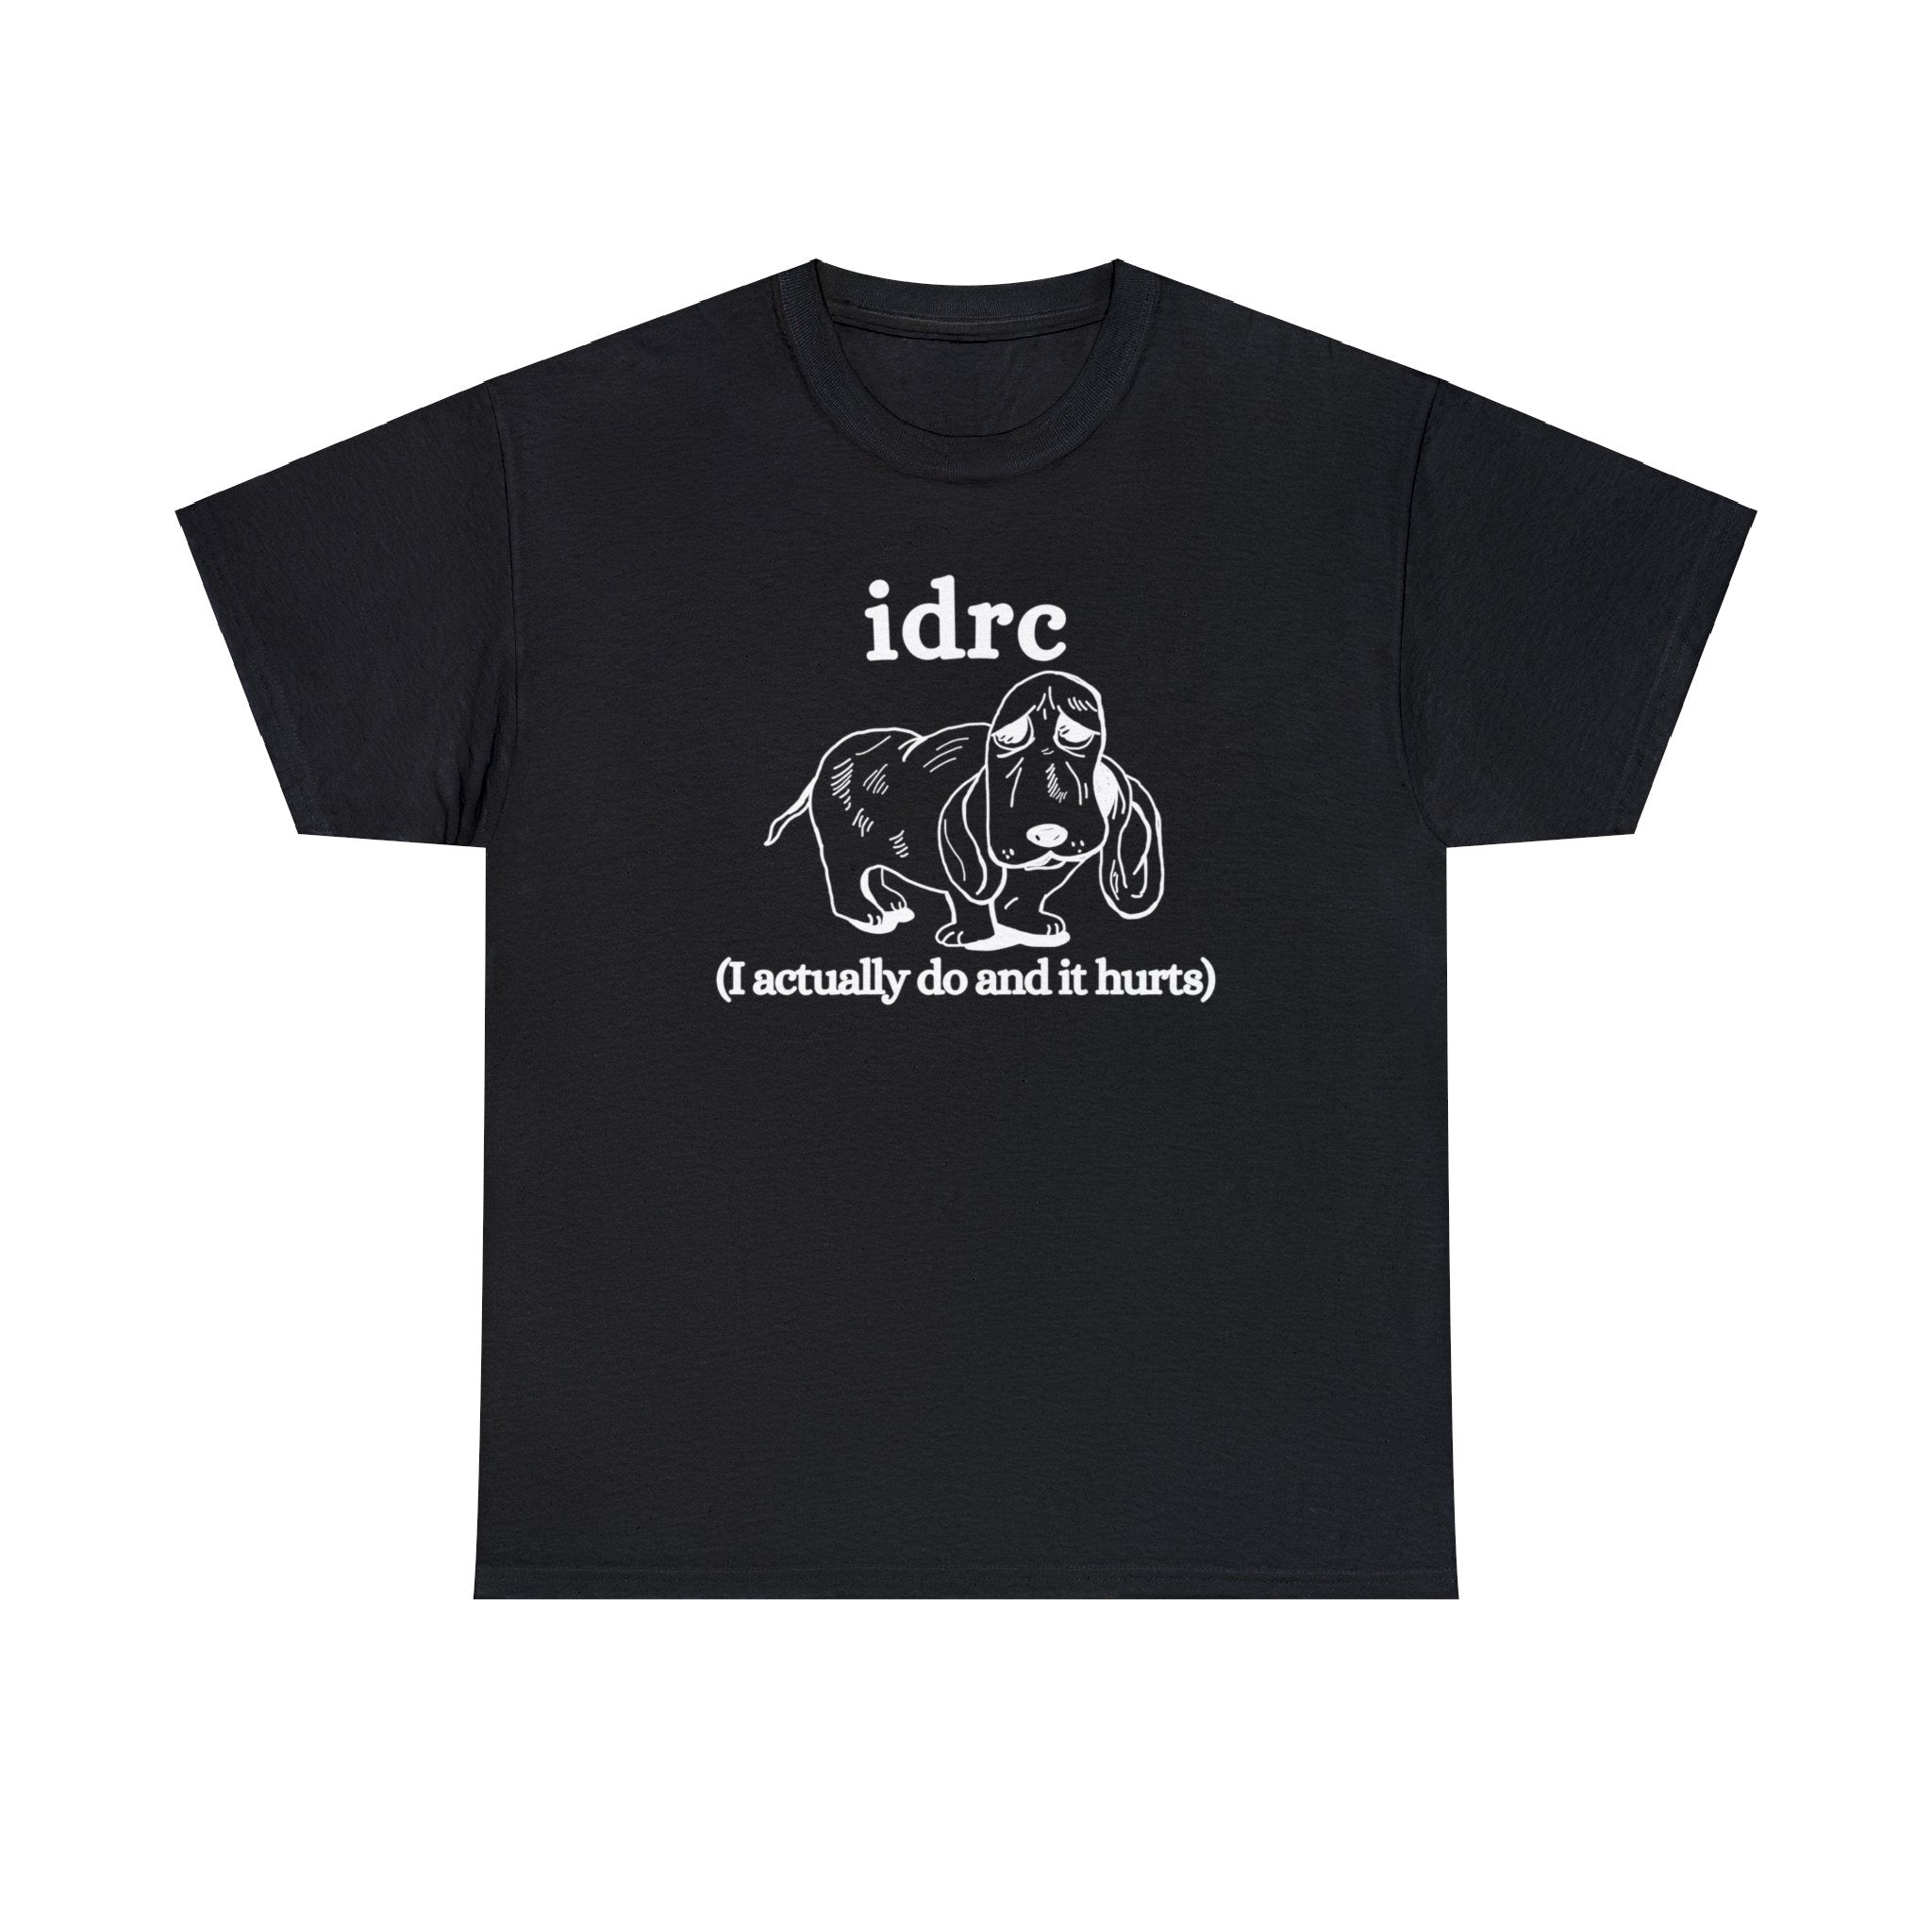 idrc (I actually do and it hurts) | graphic tee | funny shirt | vintage shirt | sarcastic t-shirt retro cartoon tee